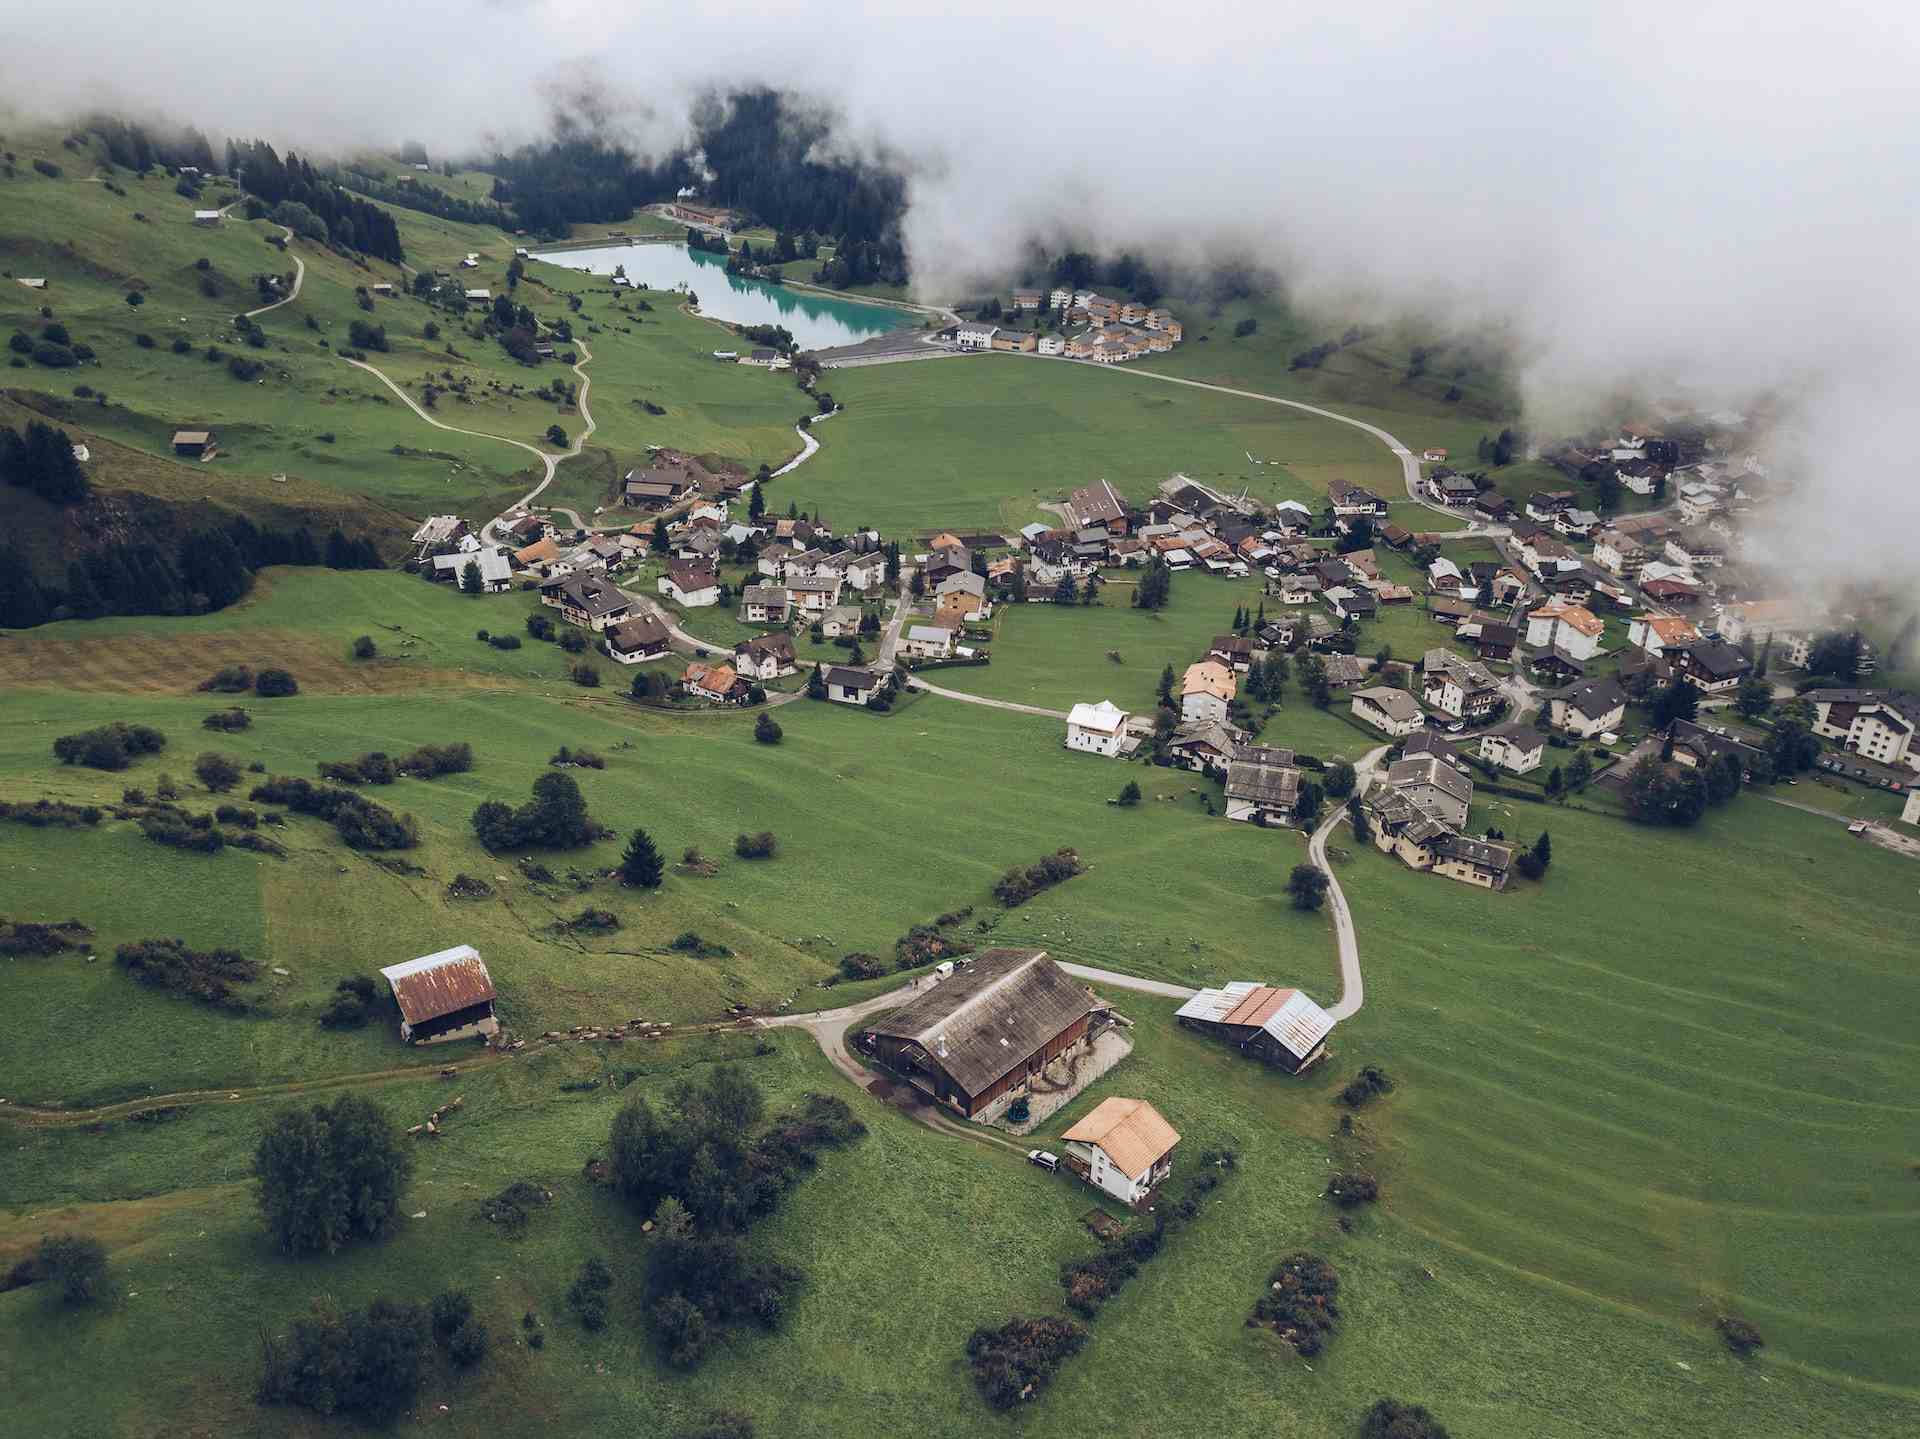 Hellmüller-Hinderling, producer in Mesocco canton of Graubünden in Switzerland